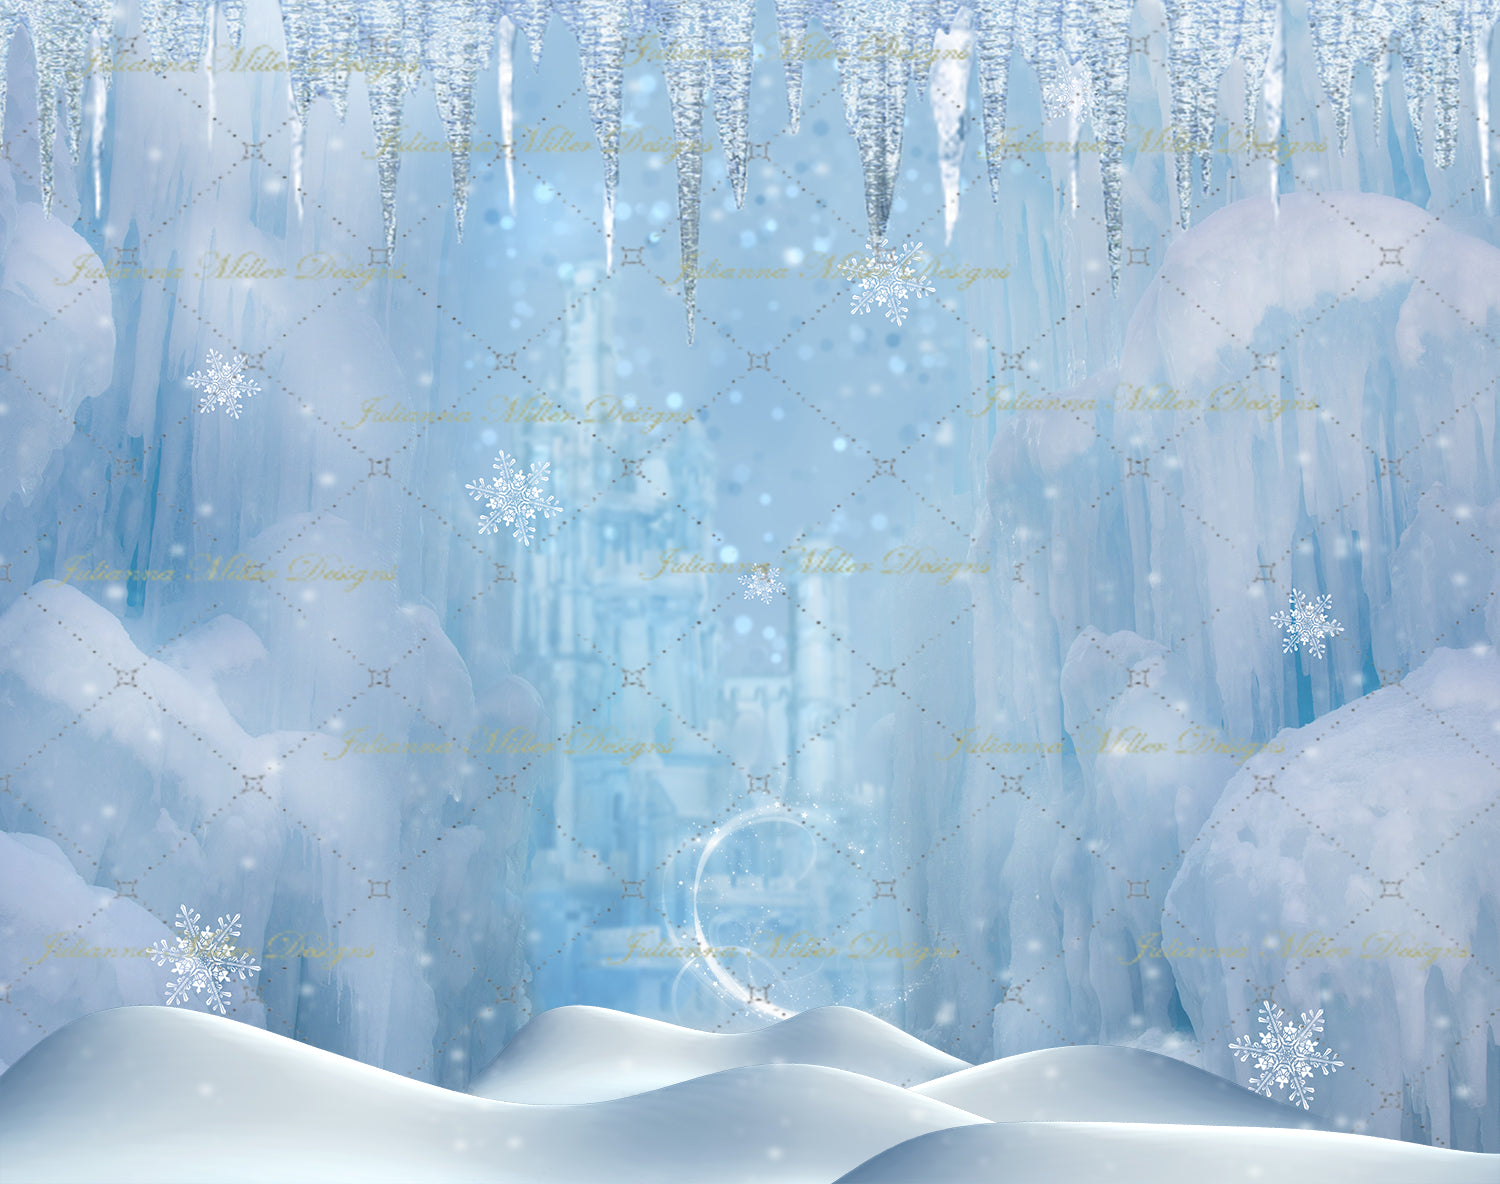 Ice Castle Background